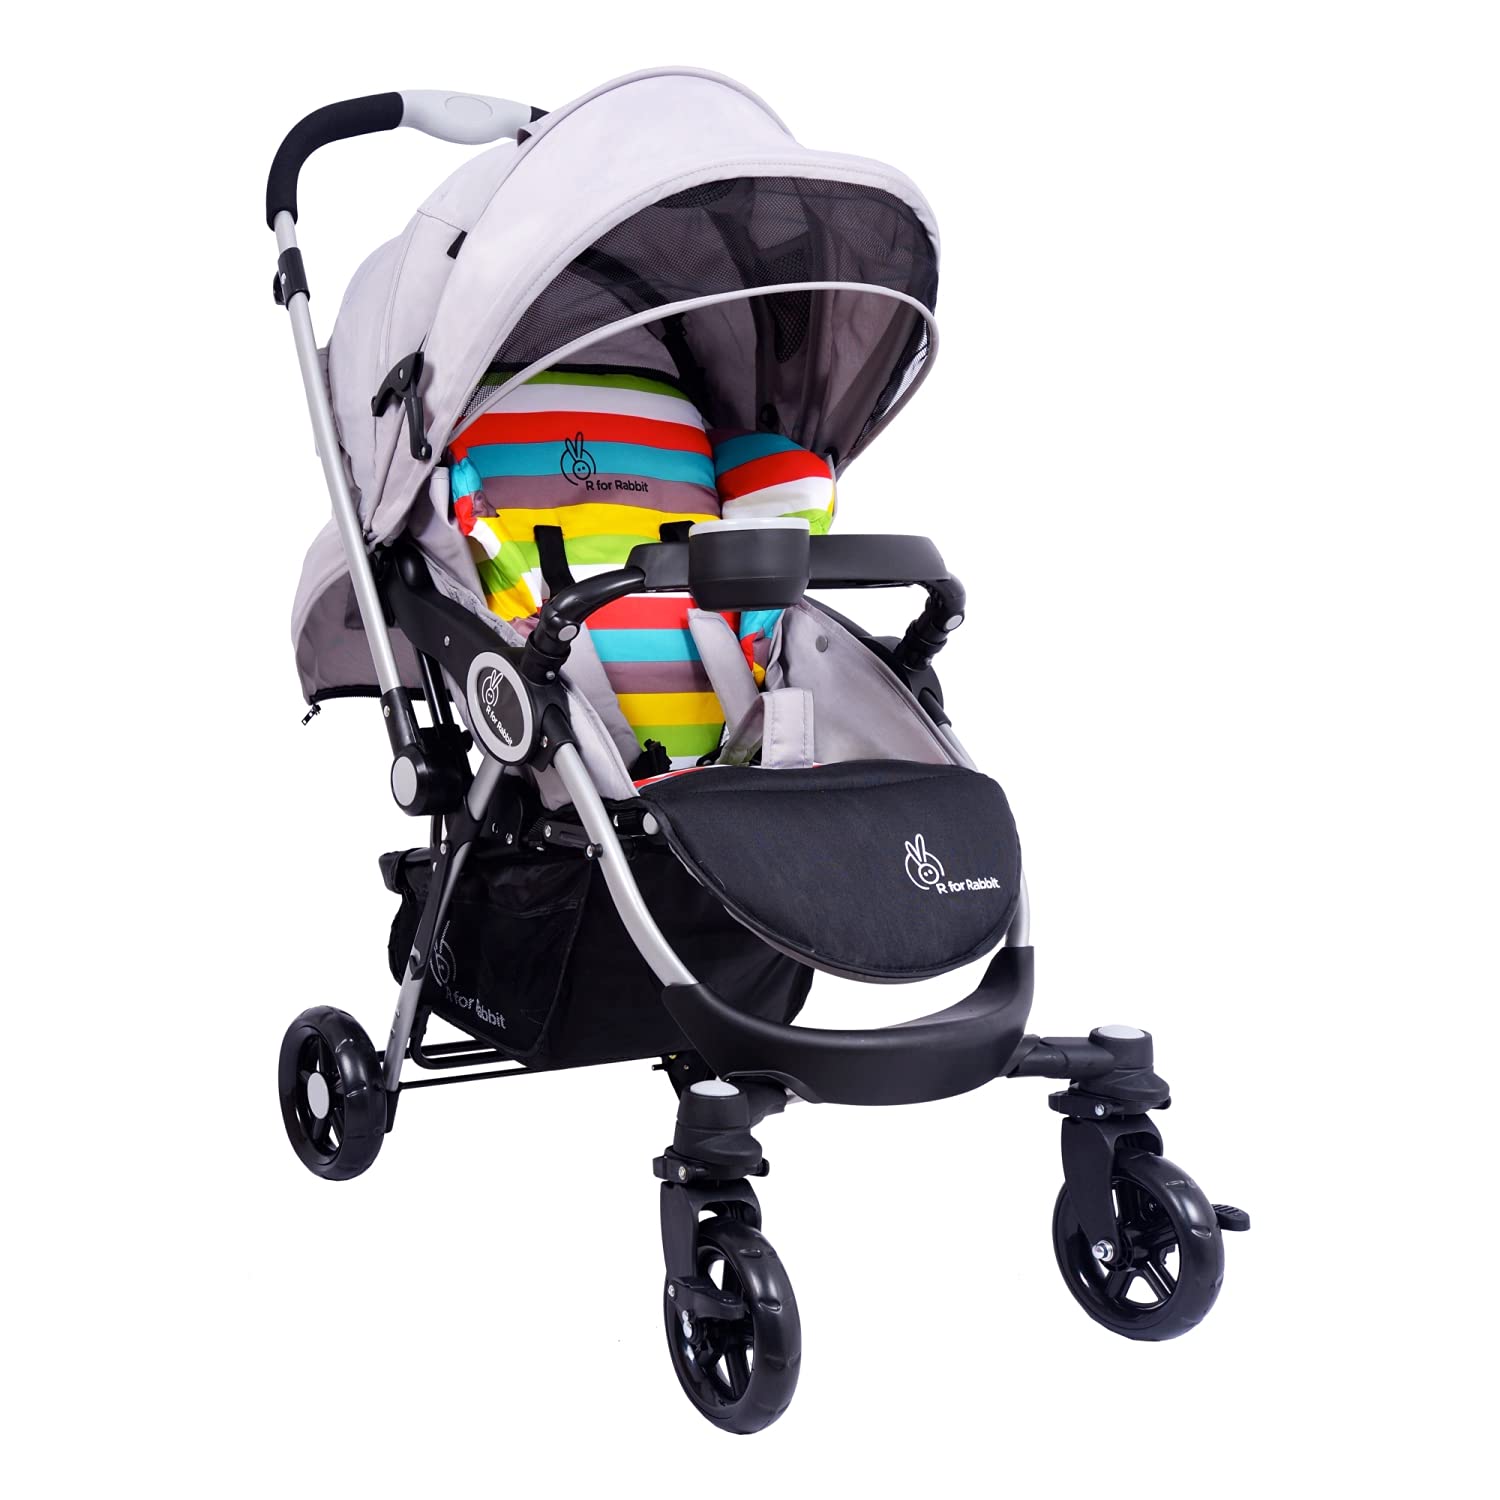 R for Rabbit Premium Chocolate Ride Stylish Baby Stroller